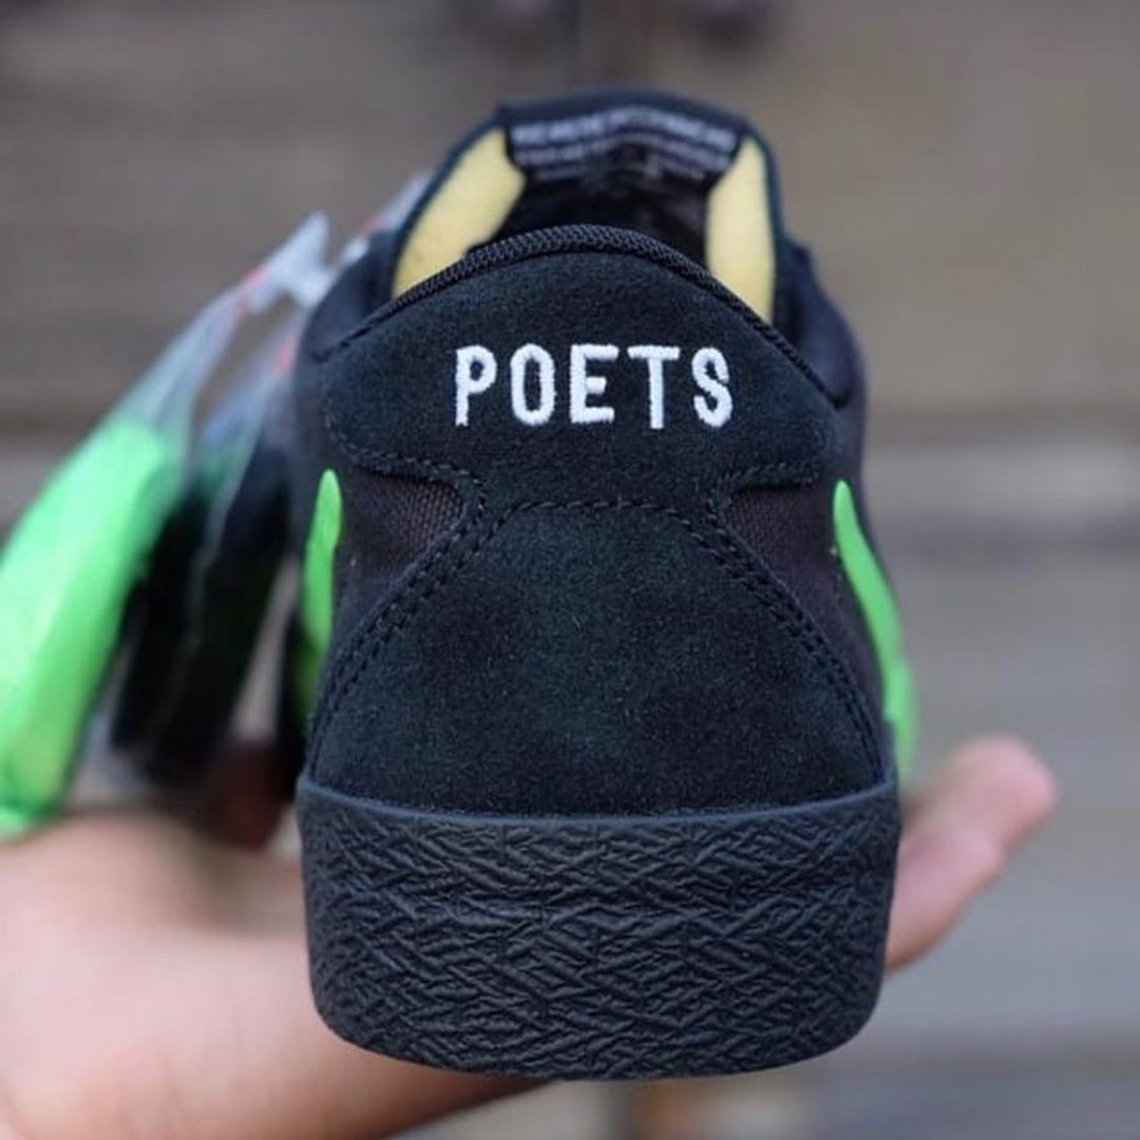 Poets Brand vapormax Nike Sb Bruin Release Info 01